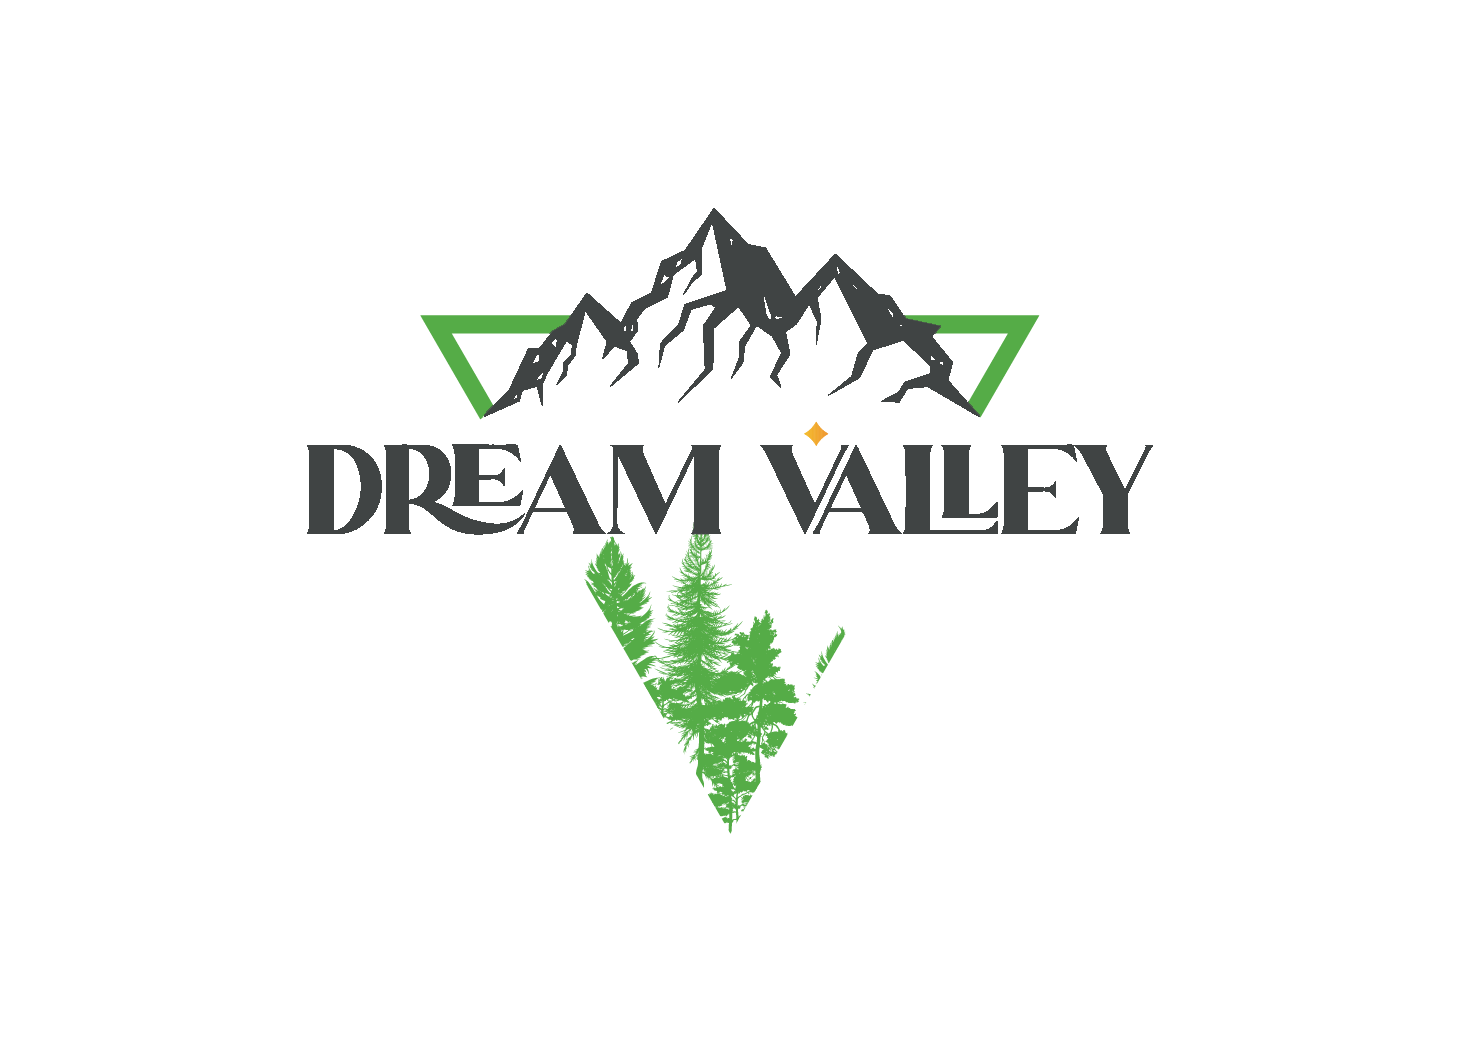 dream-valley-c